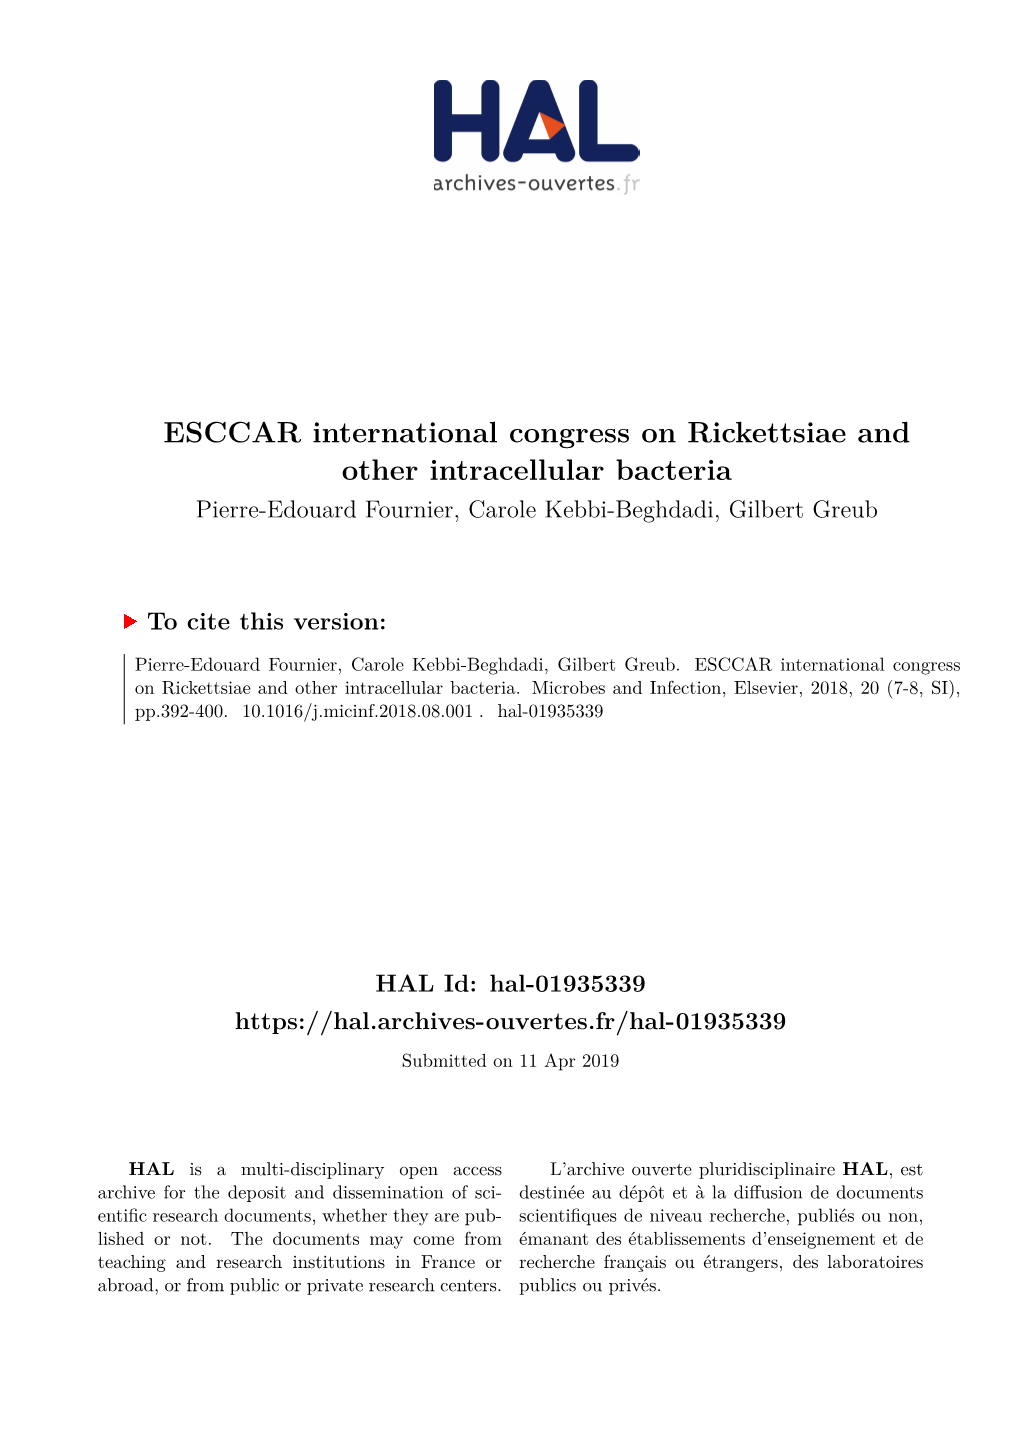 ESCCAR International Congress on Rickettsiae and Other Intracellular Bacteria Pierre-Edouard Fournier, Carole Kebbi-Beghdadi, Gilbert Greub